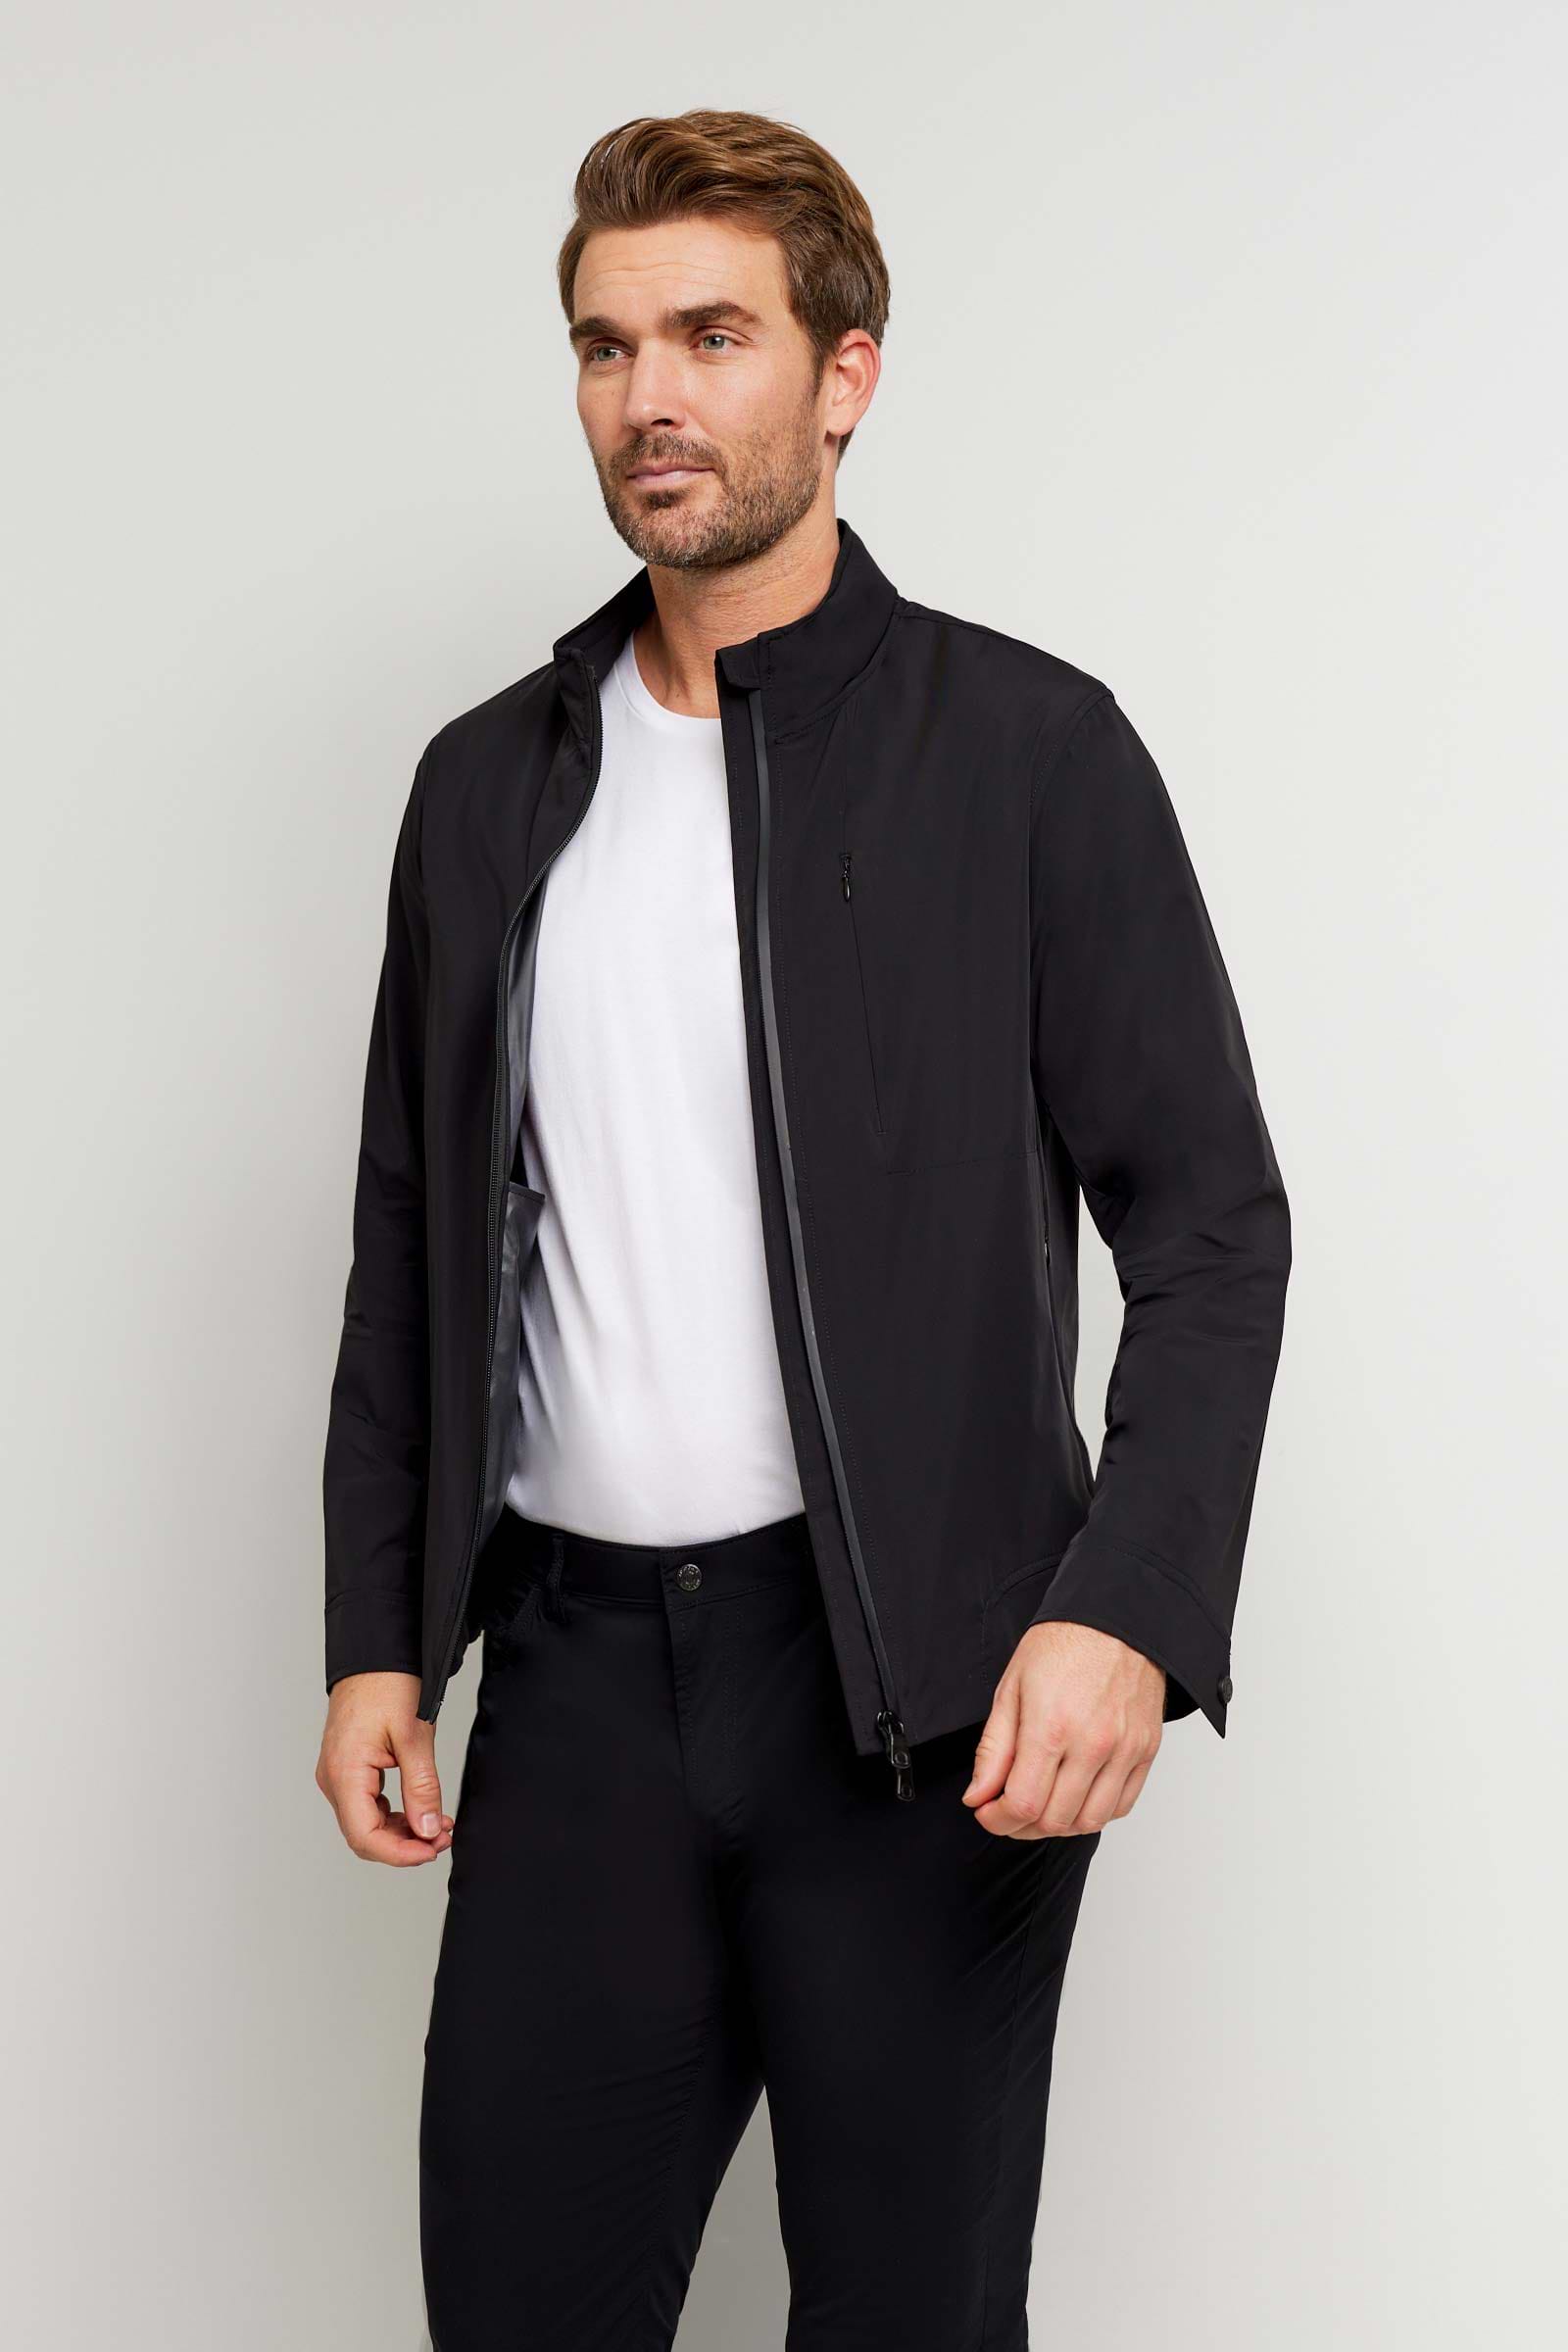 The Best Travel Jacket. Man Showing the Side Profile of a Men's Jack Zip Jacket in Black.